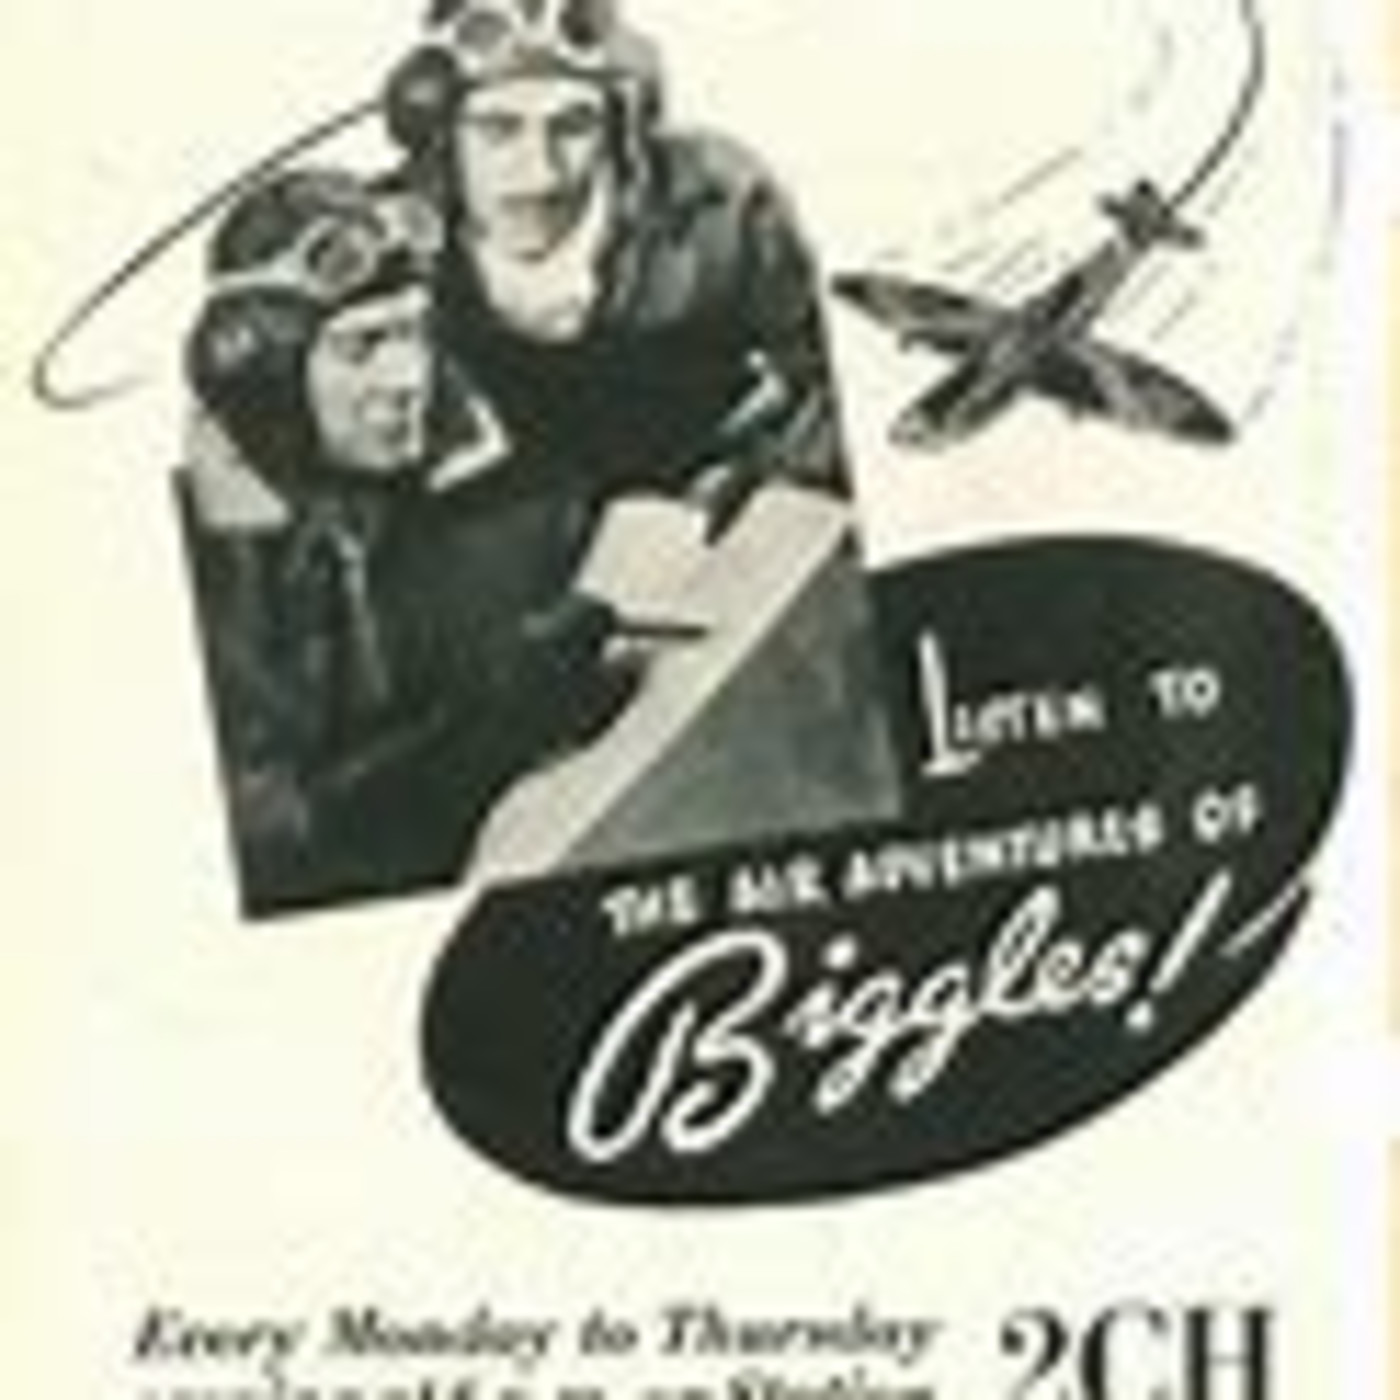 Air Adventures of Biggles xx-xx-xx International Brigade (35)